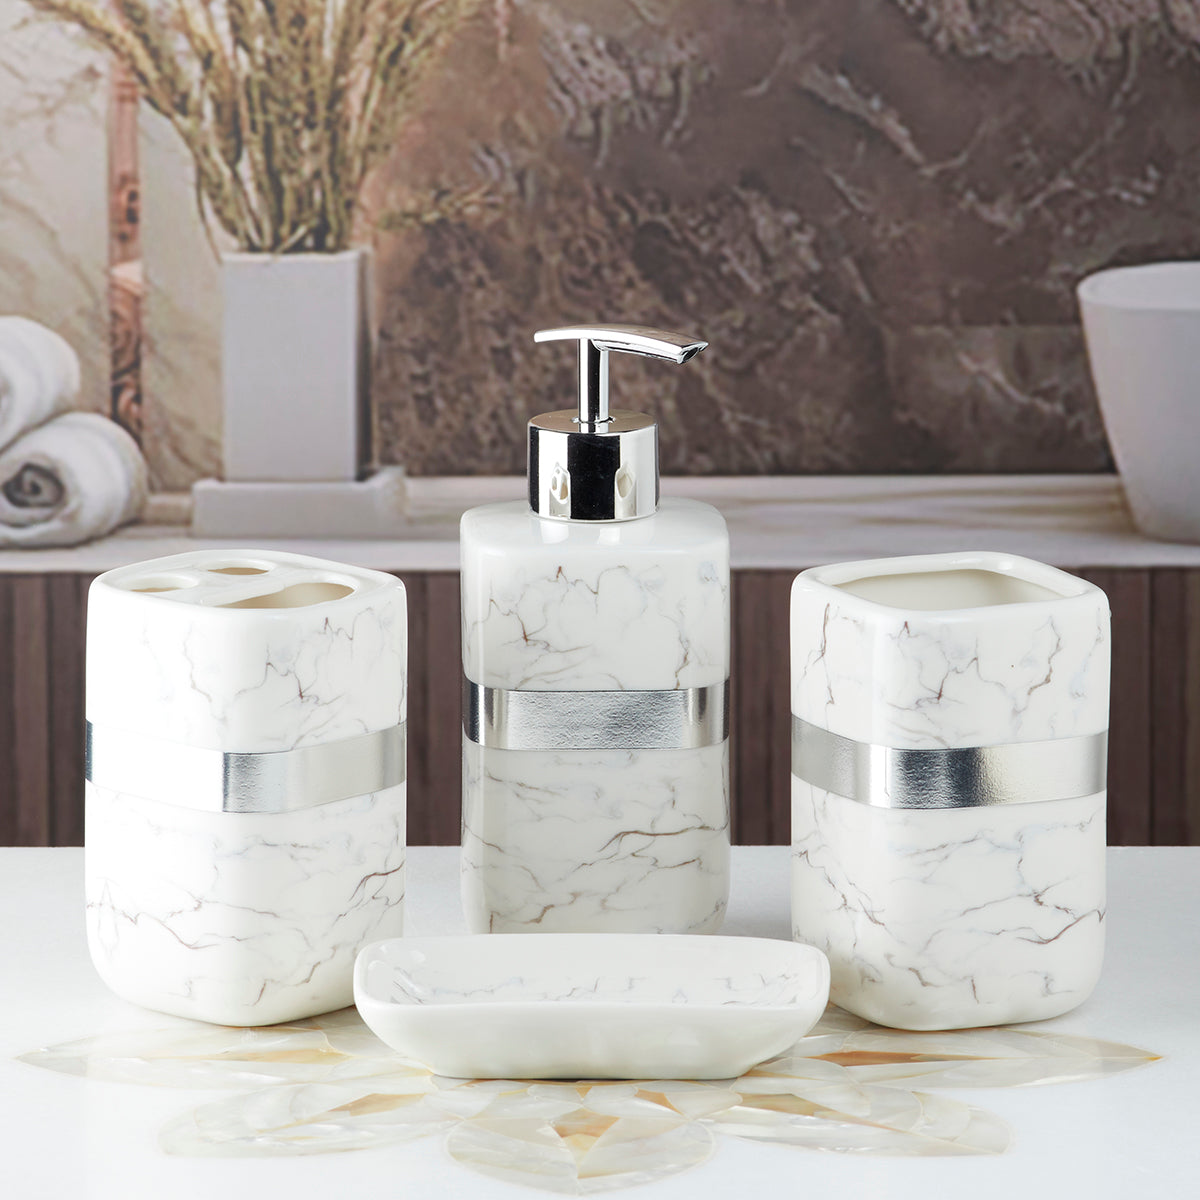 Ceramic Bathroom Accessories Set of 4 Bath Set with Soap Dispenser (10111)